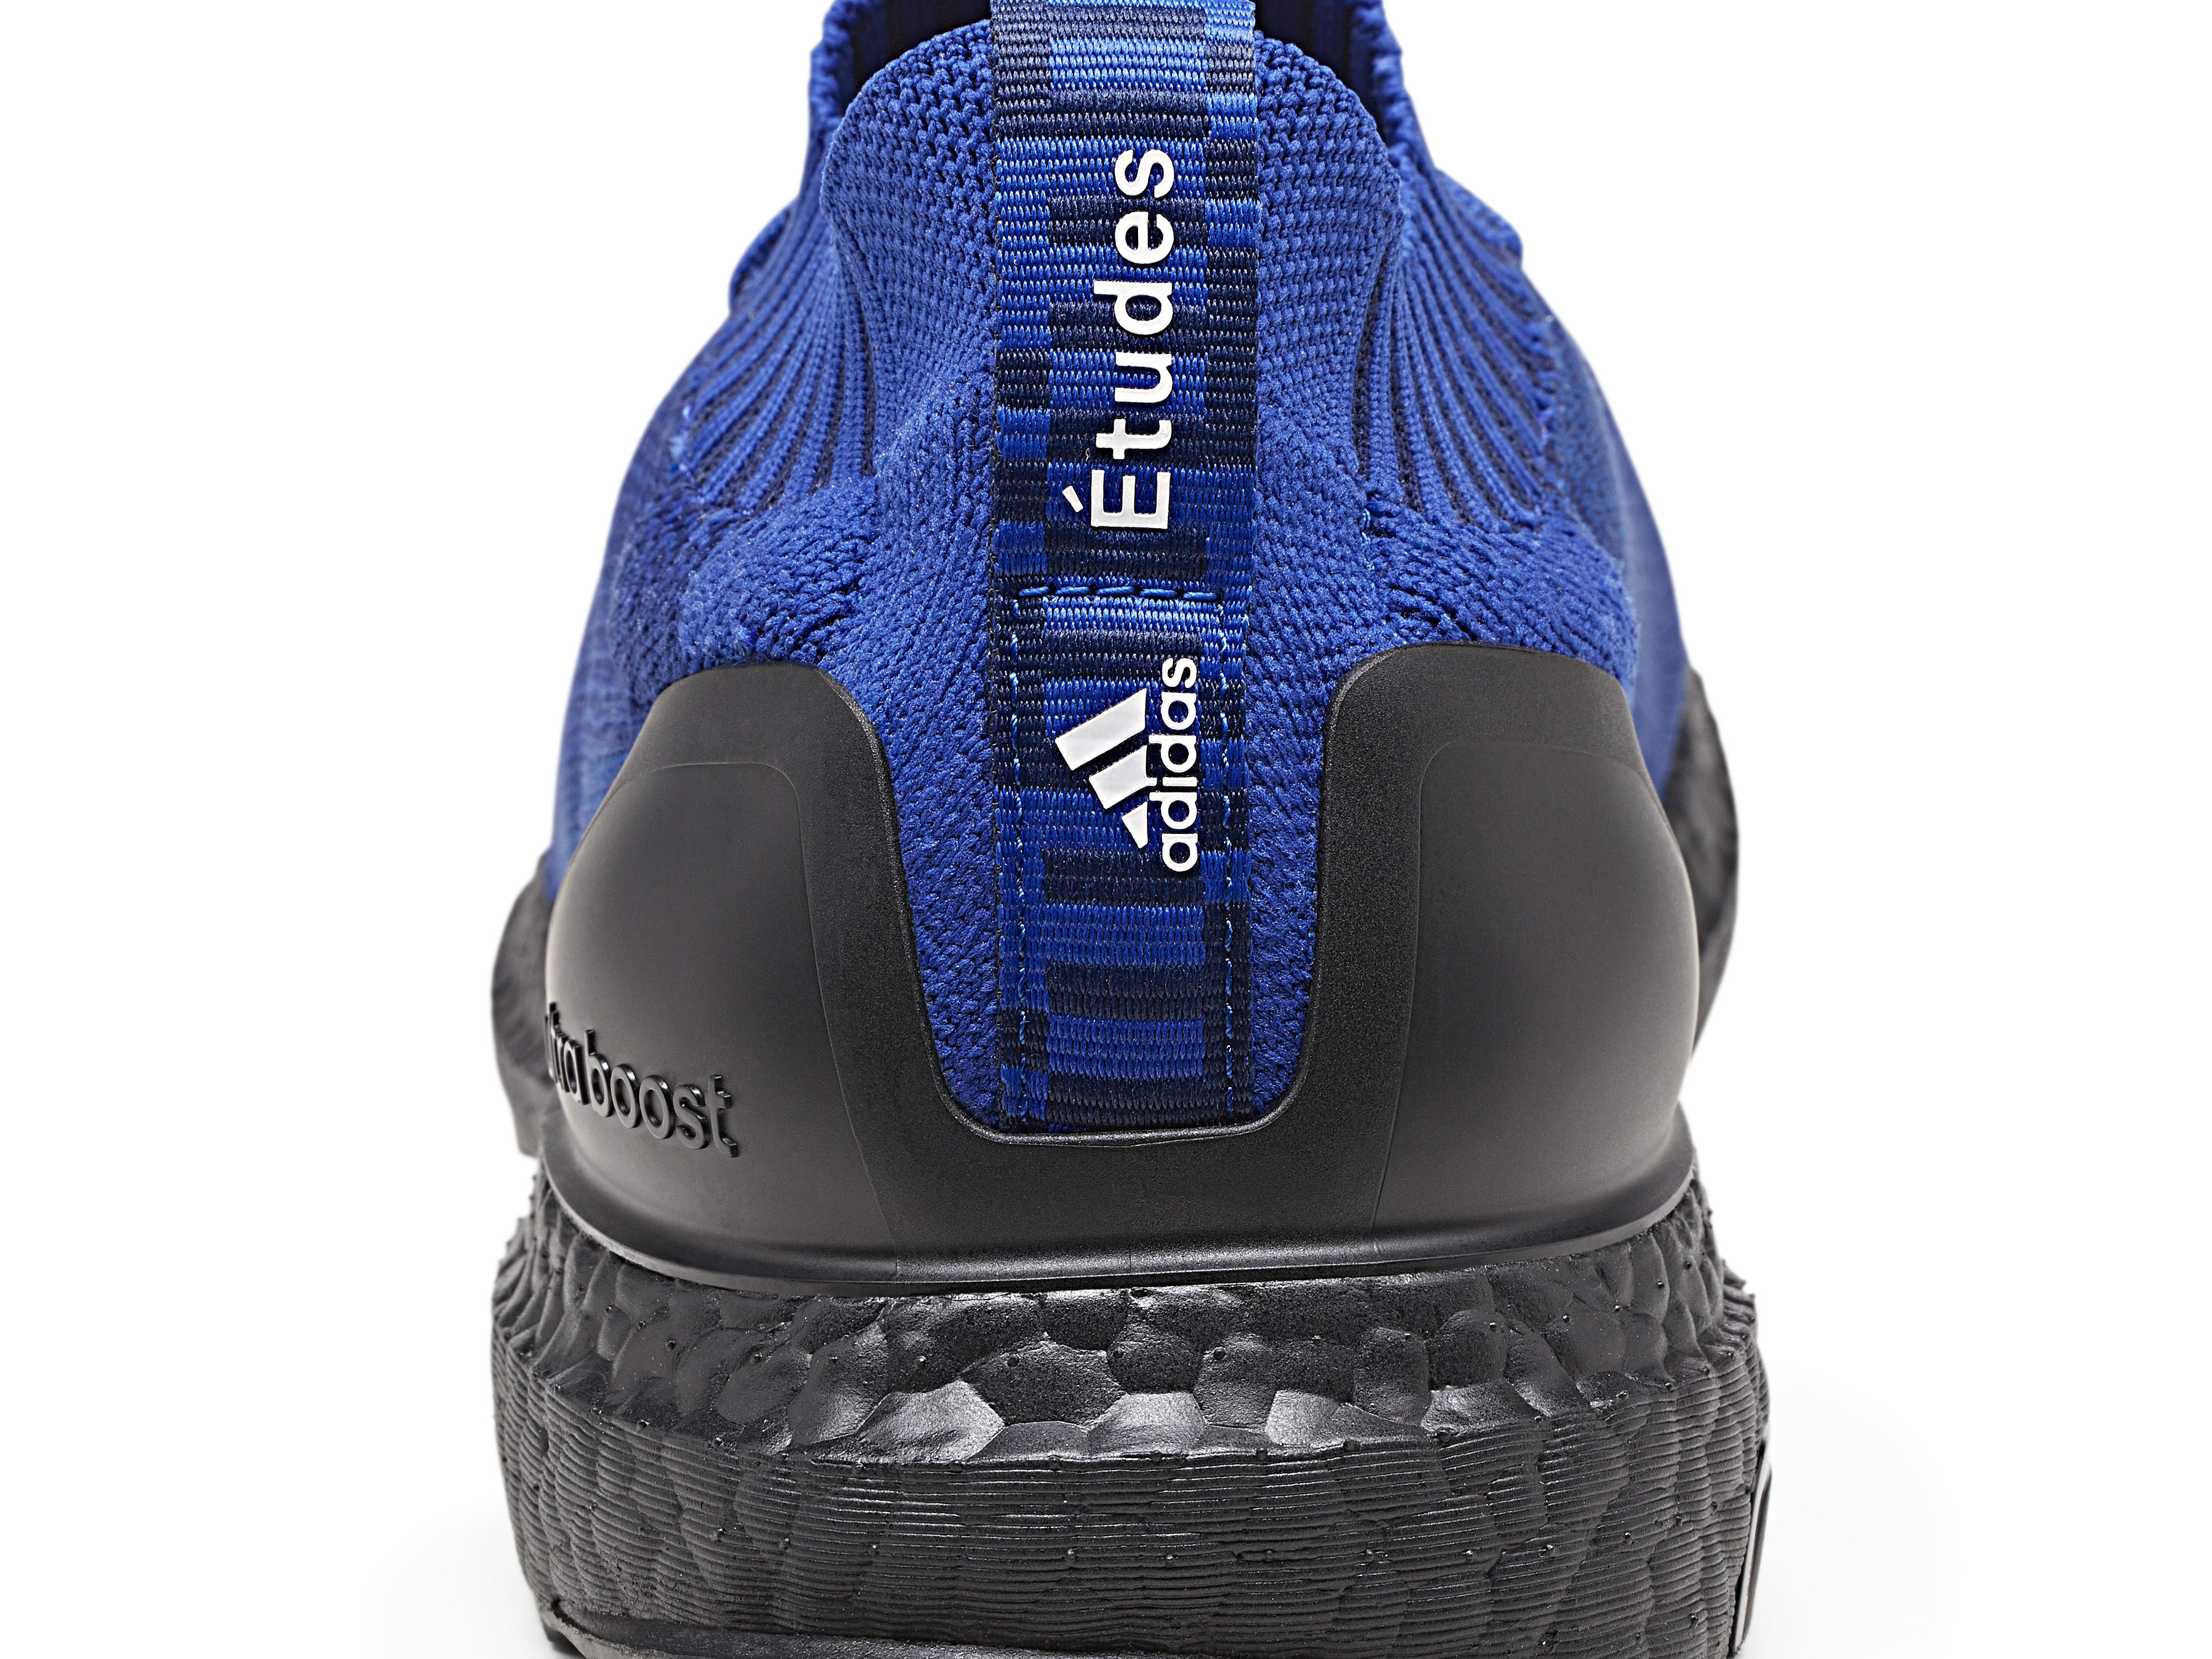 Études x Adidas Consortium Ultra Boost Uncaged D97732 (Heel)